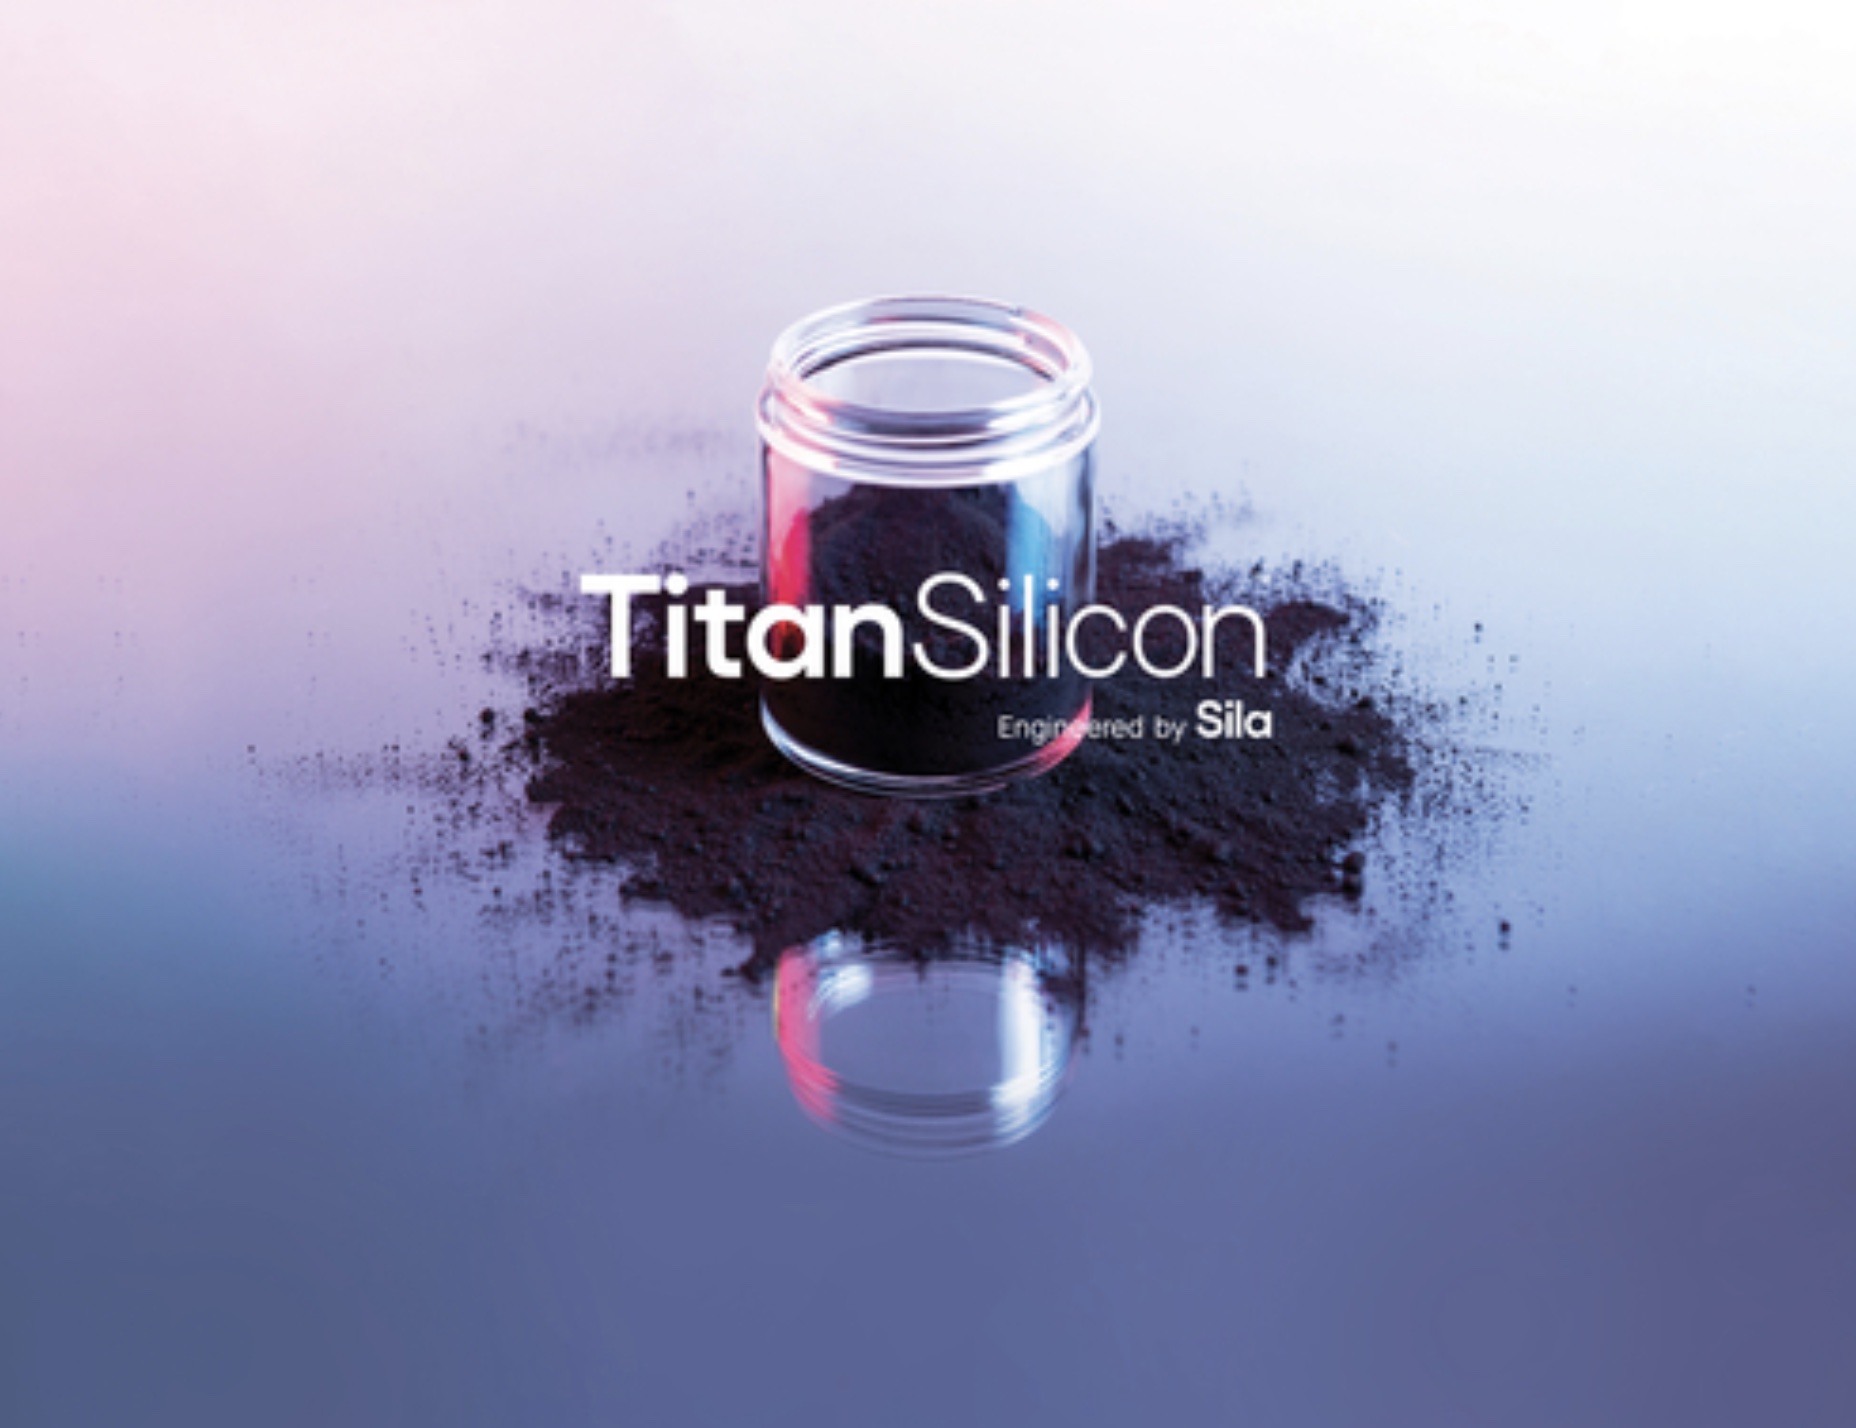 panasonic-sila-titan-silicon